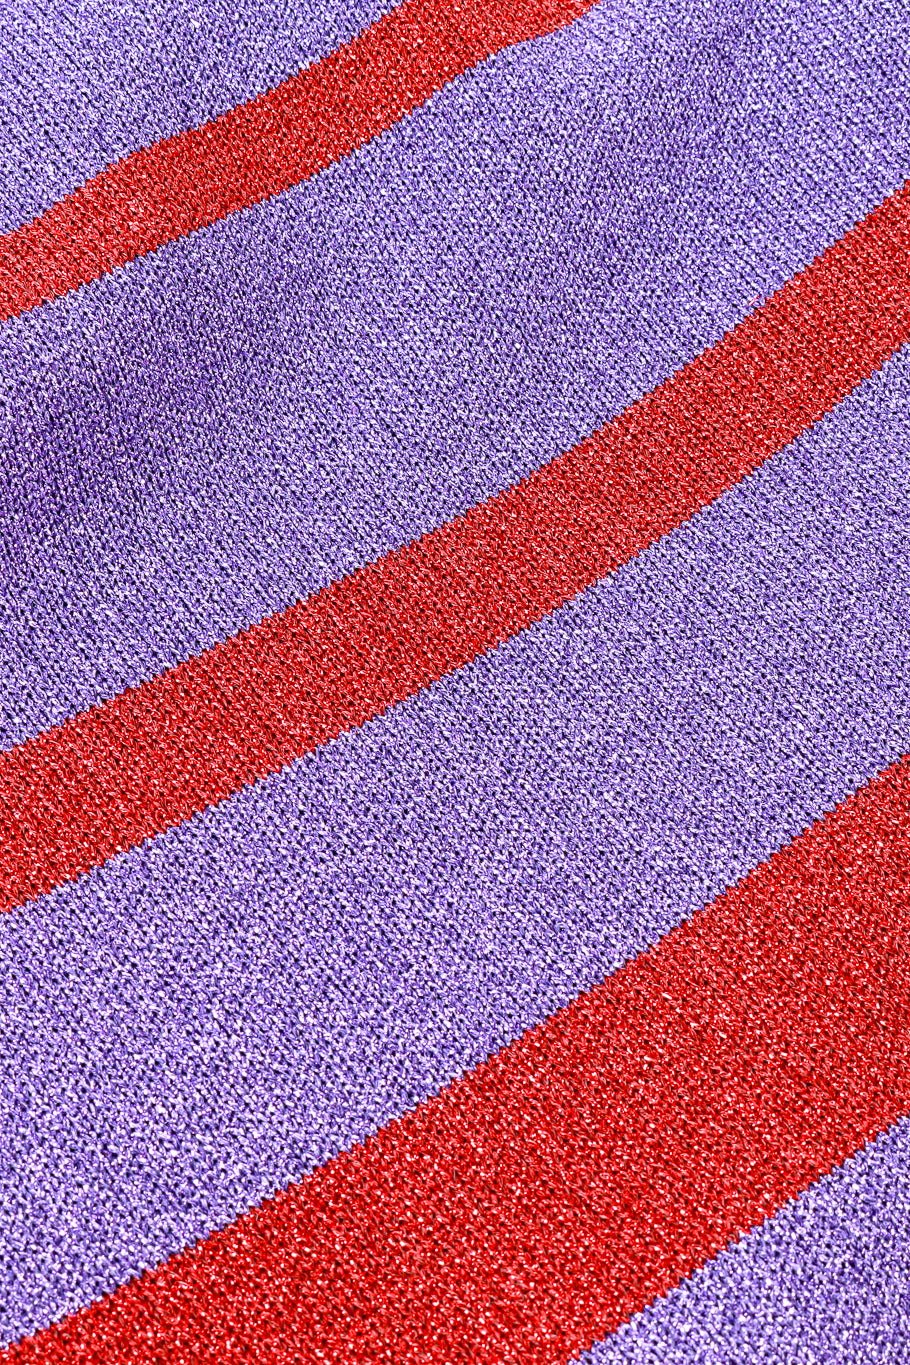 Paco Rabanne Striped Metallic Knit Maxi Dress closeup fabric at Recess LA